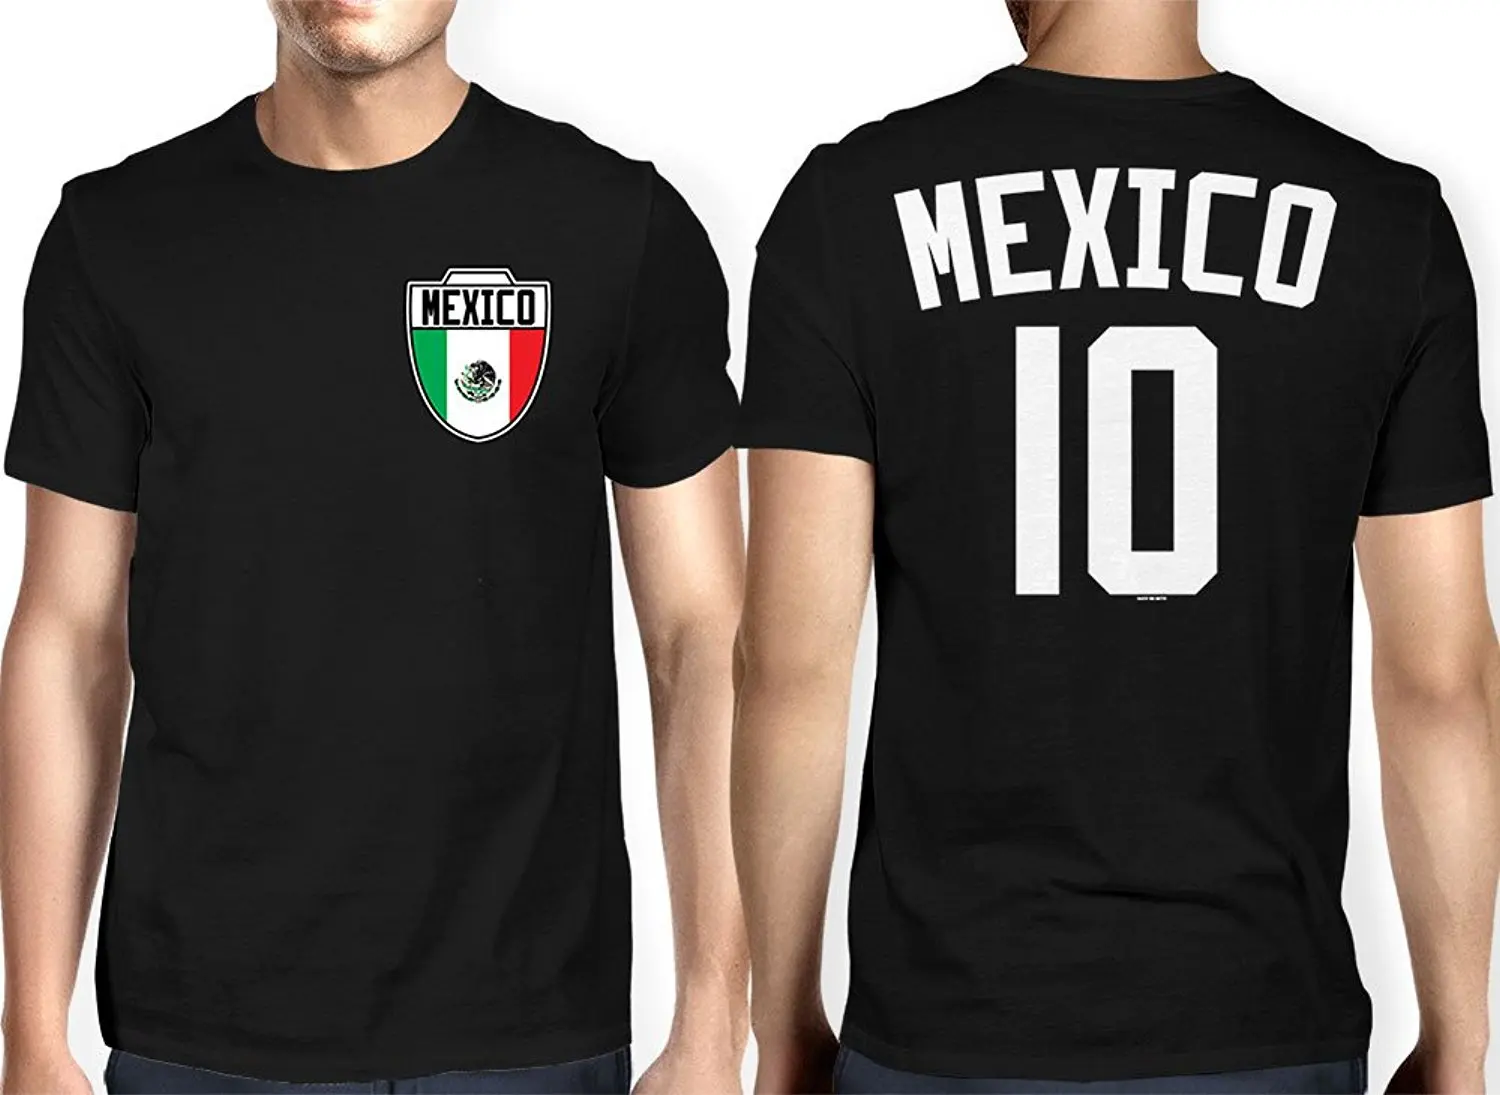 

2019 New Men T Shirt Cotton Men Short Sleeve Tee Shirts Harajuku Shirt Mens Mexico Mexican - Soccers, Footballer T-shirt